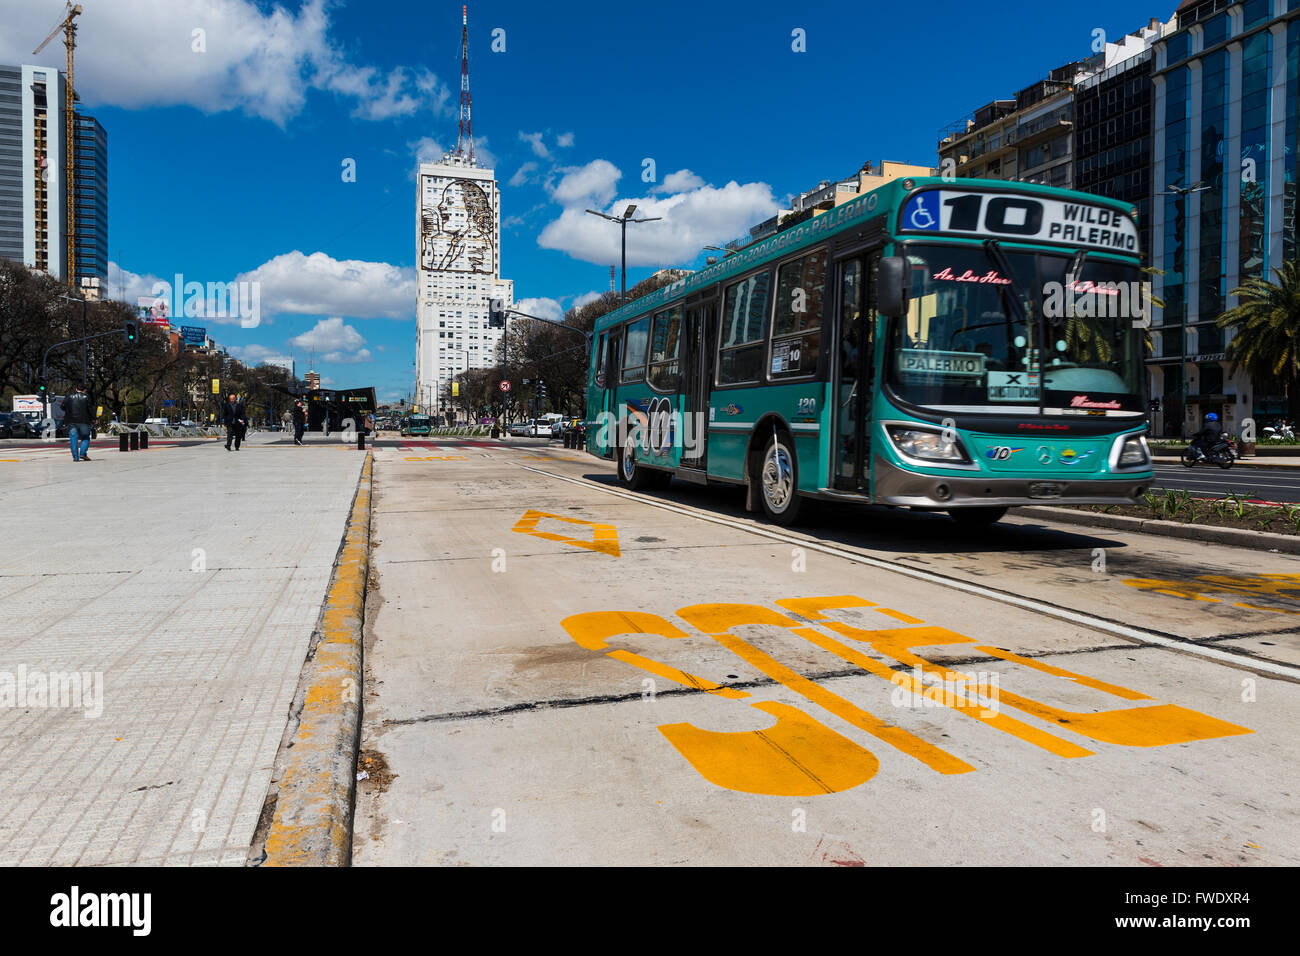 Buenos Aires, Argentina - October 4, 2013: A public bus at the 9 de Julio Avenue in Buenos Aires, Argentina. Stock Photo